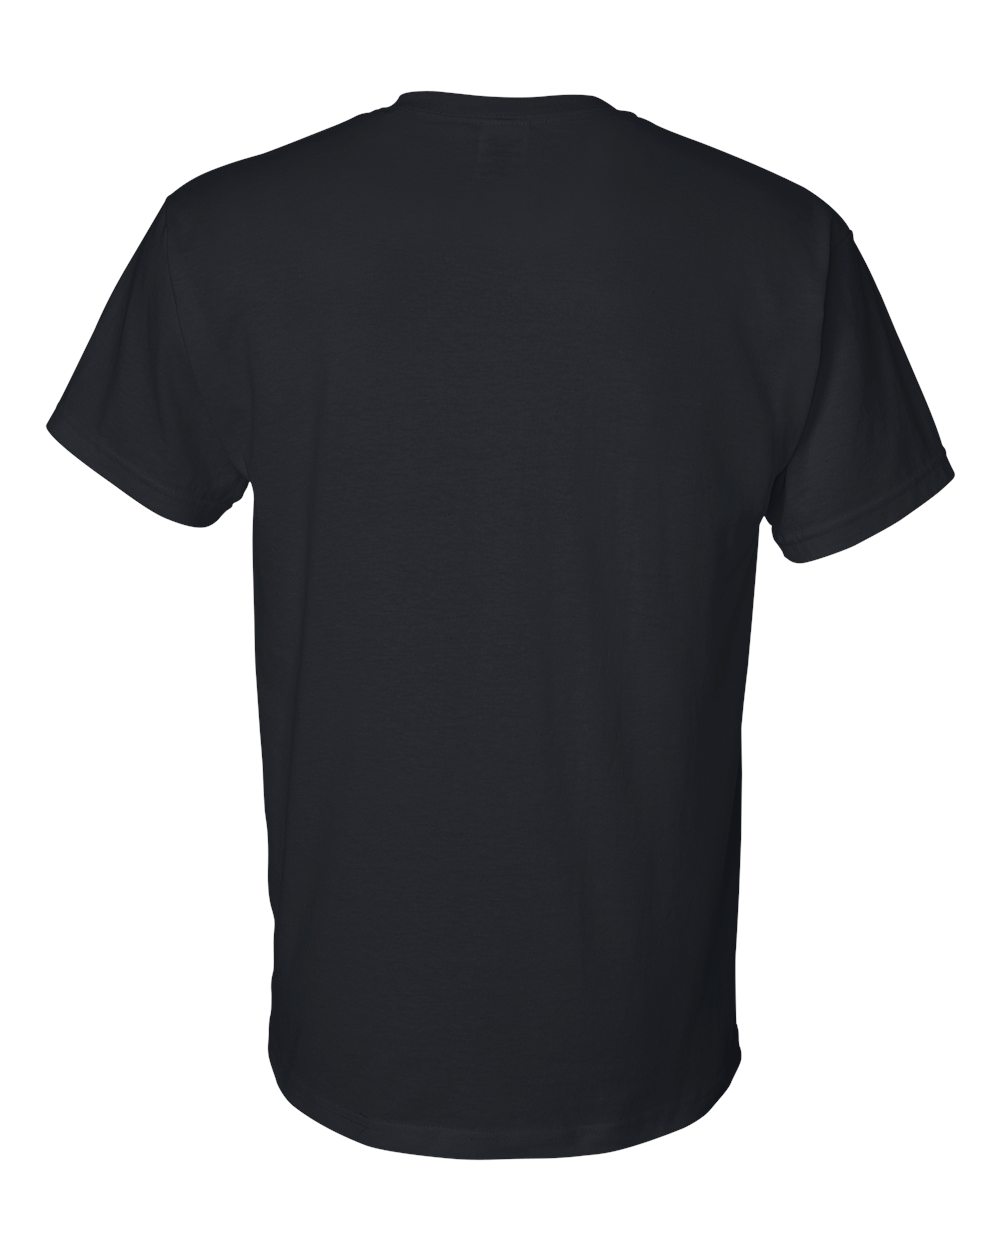 Adult Coaching Team 50-50 Blend Black Unisex Short Sleeve Shirt.